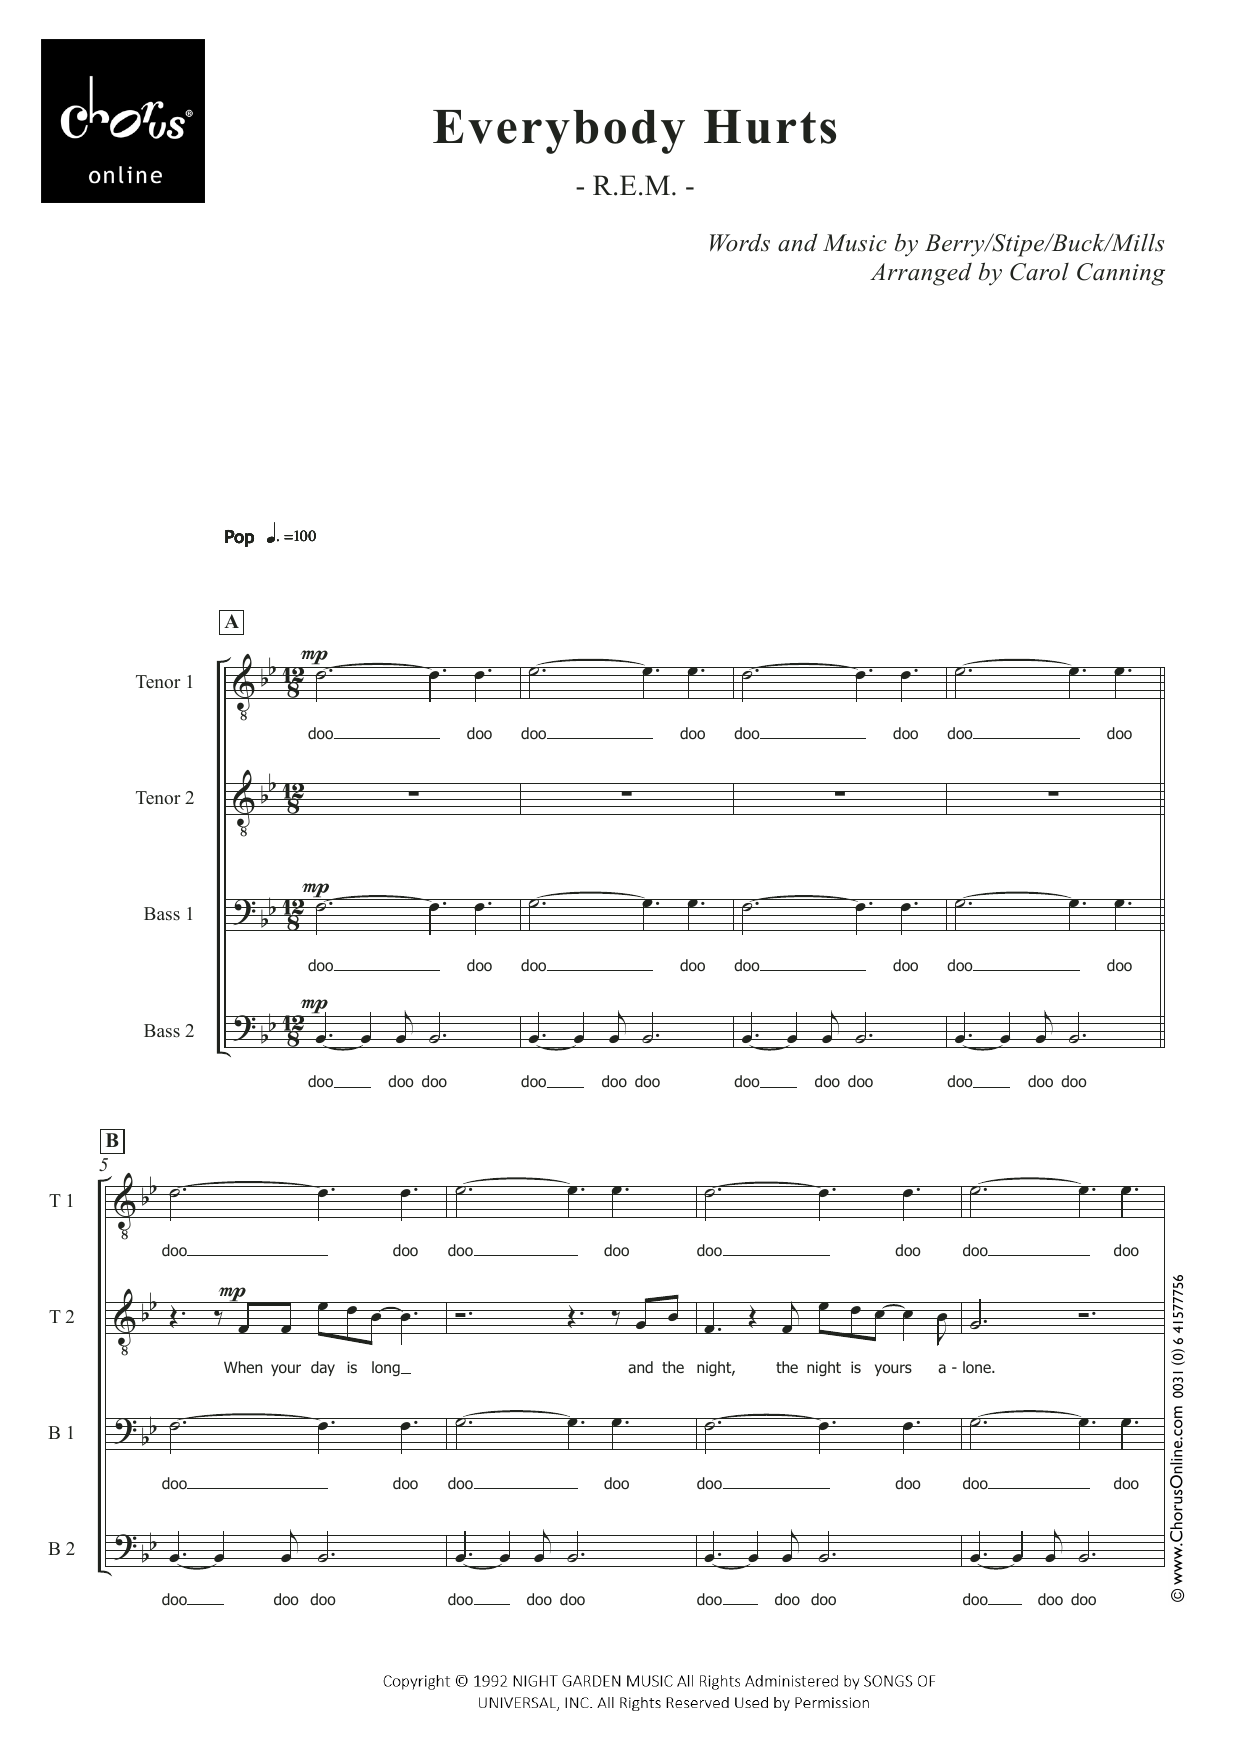 R.E.M. Everybody Hurts (arr. Carol Canning) sheet music notes printable PDF score